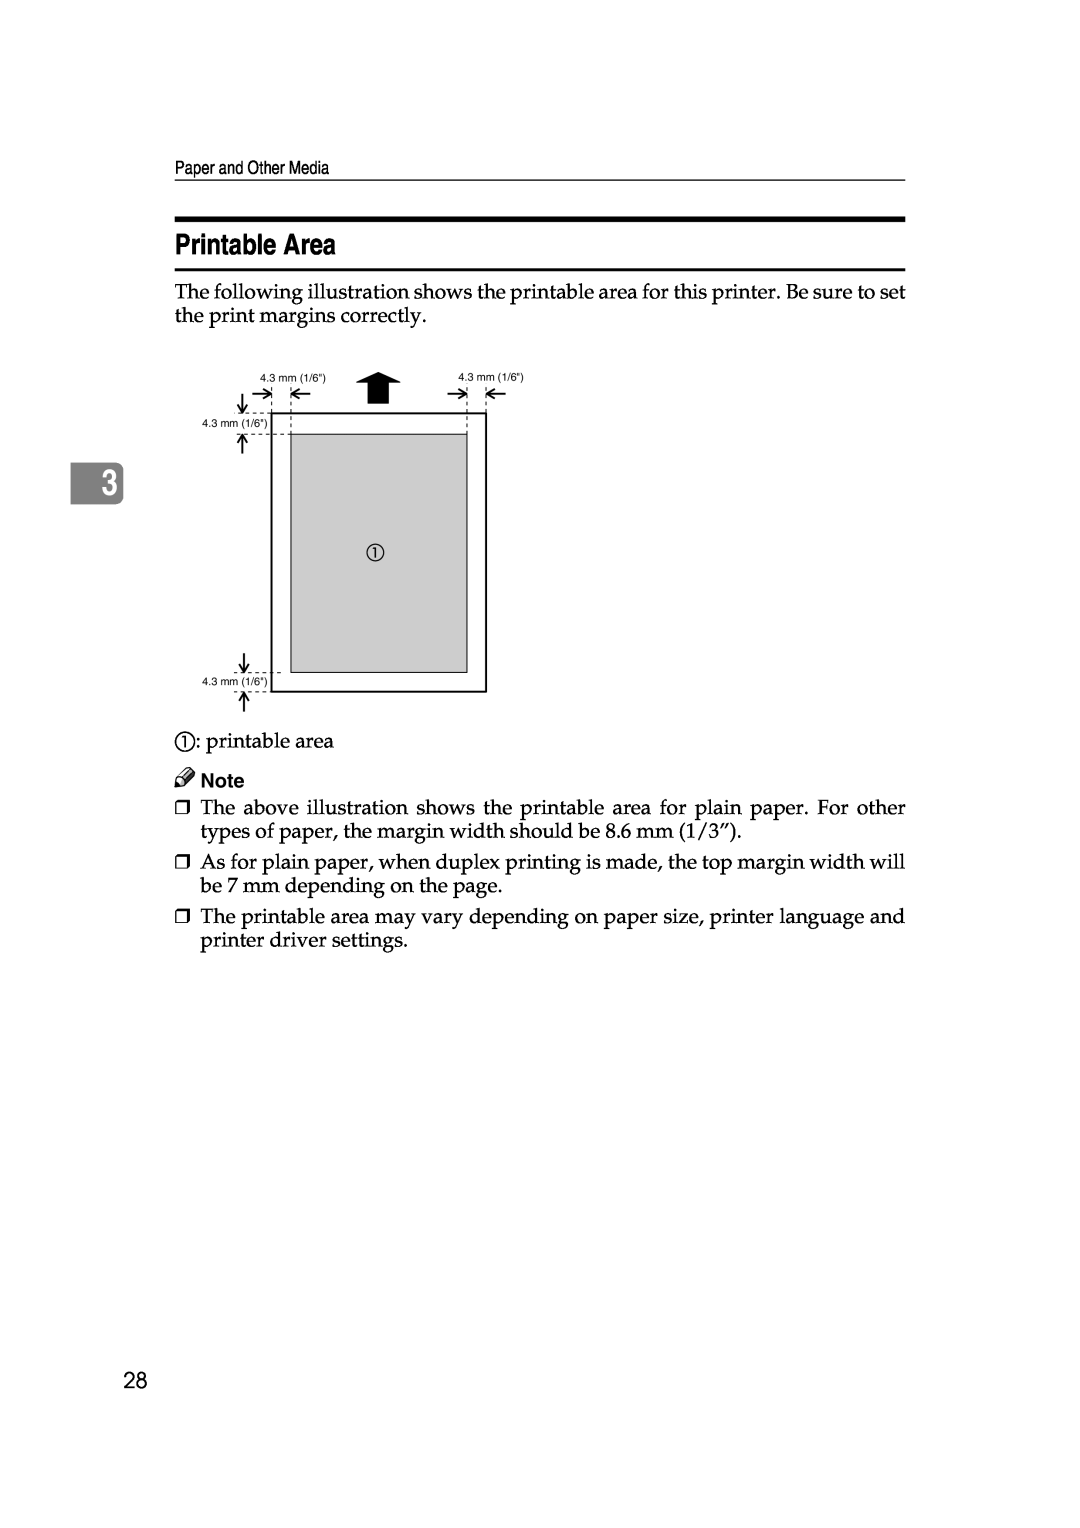 Lanier AP206 manual Printable Area 